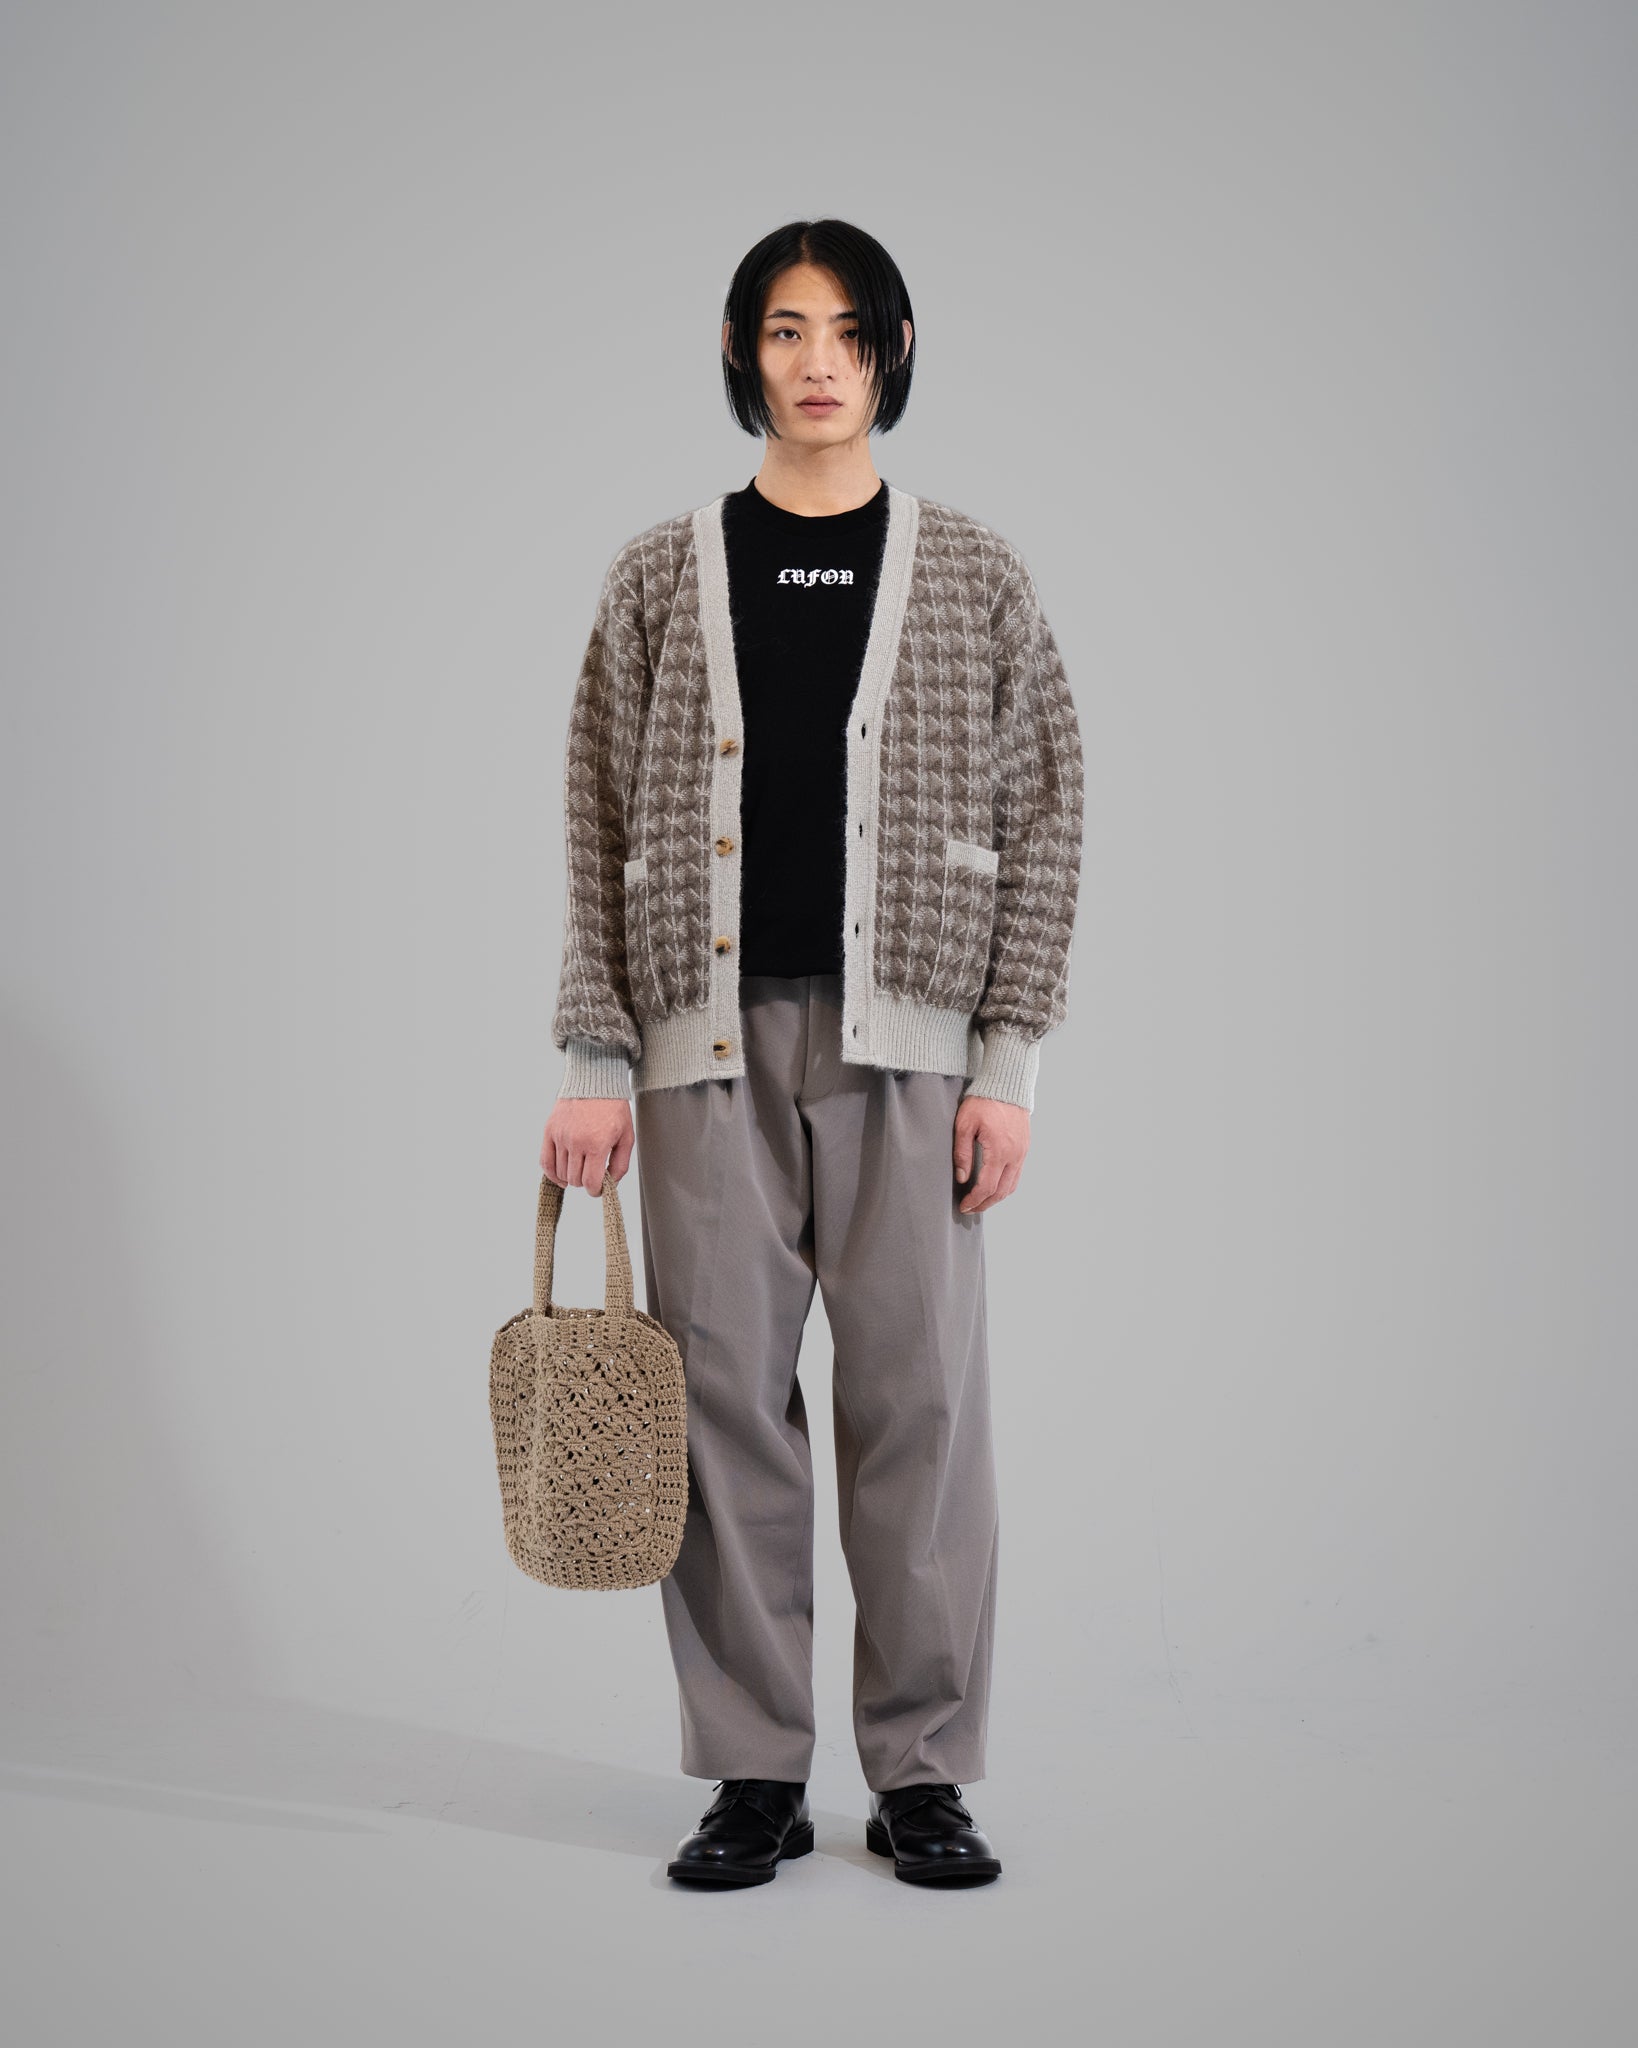 Crochet Hand Knit Tote Bag --MOCHA